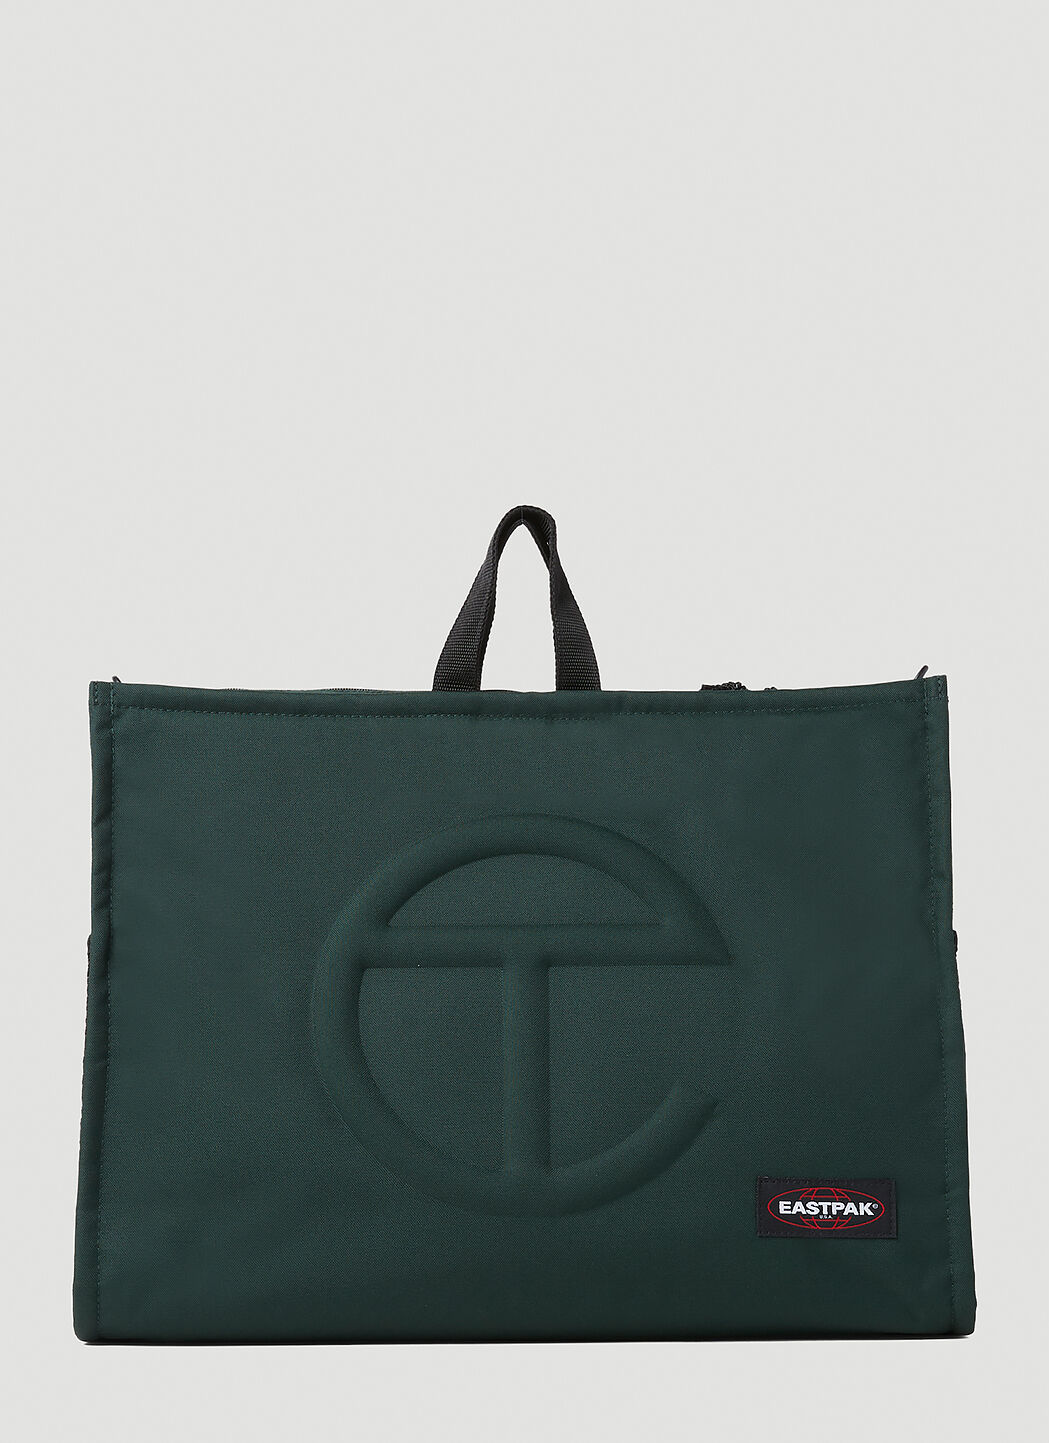 Eastpak x Telfar Shopper Large Tote Bag 红色 est0353019